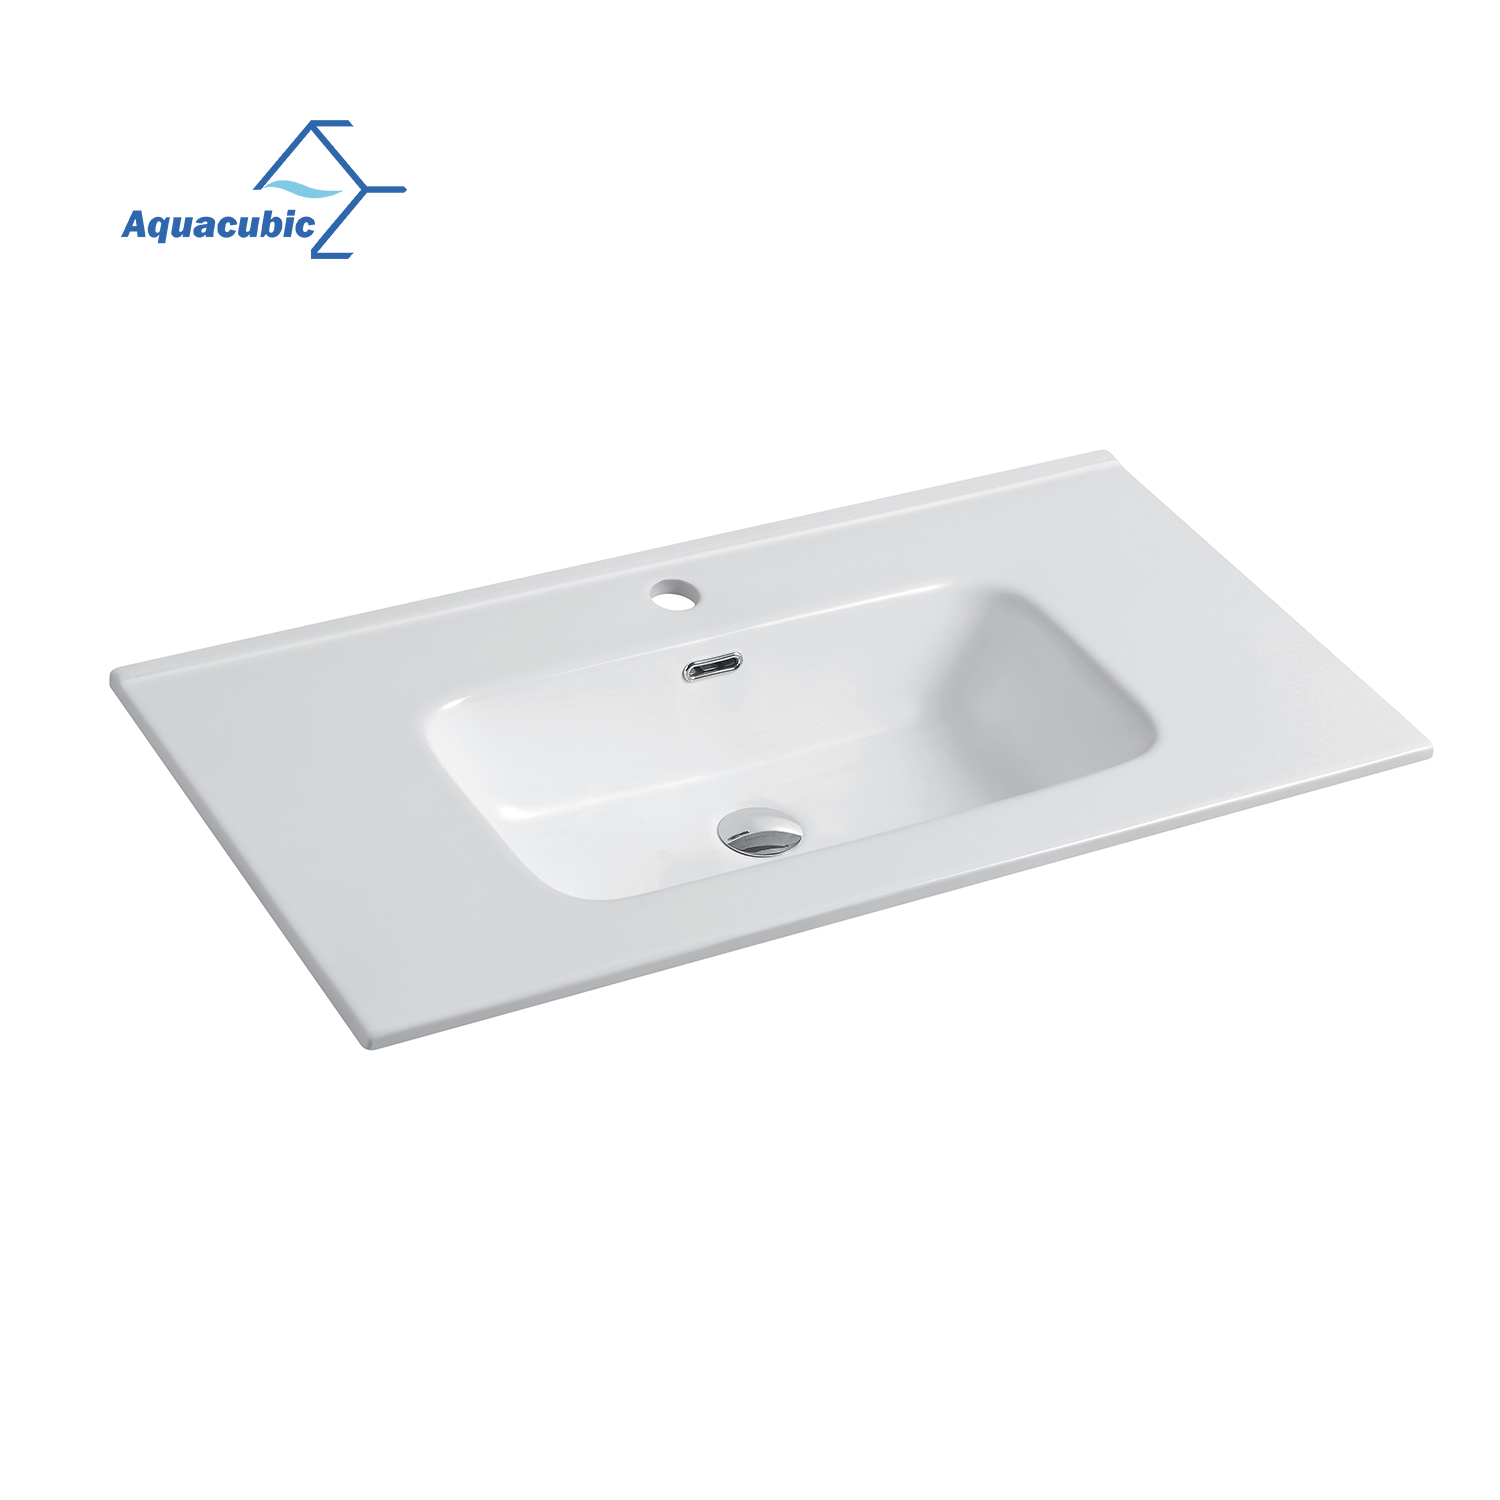 Aquacubic Drop-in Self-Rimming Rectangular Bathroom Double Bowl Vanity Top Sink in White